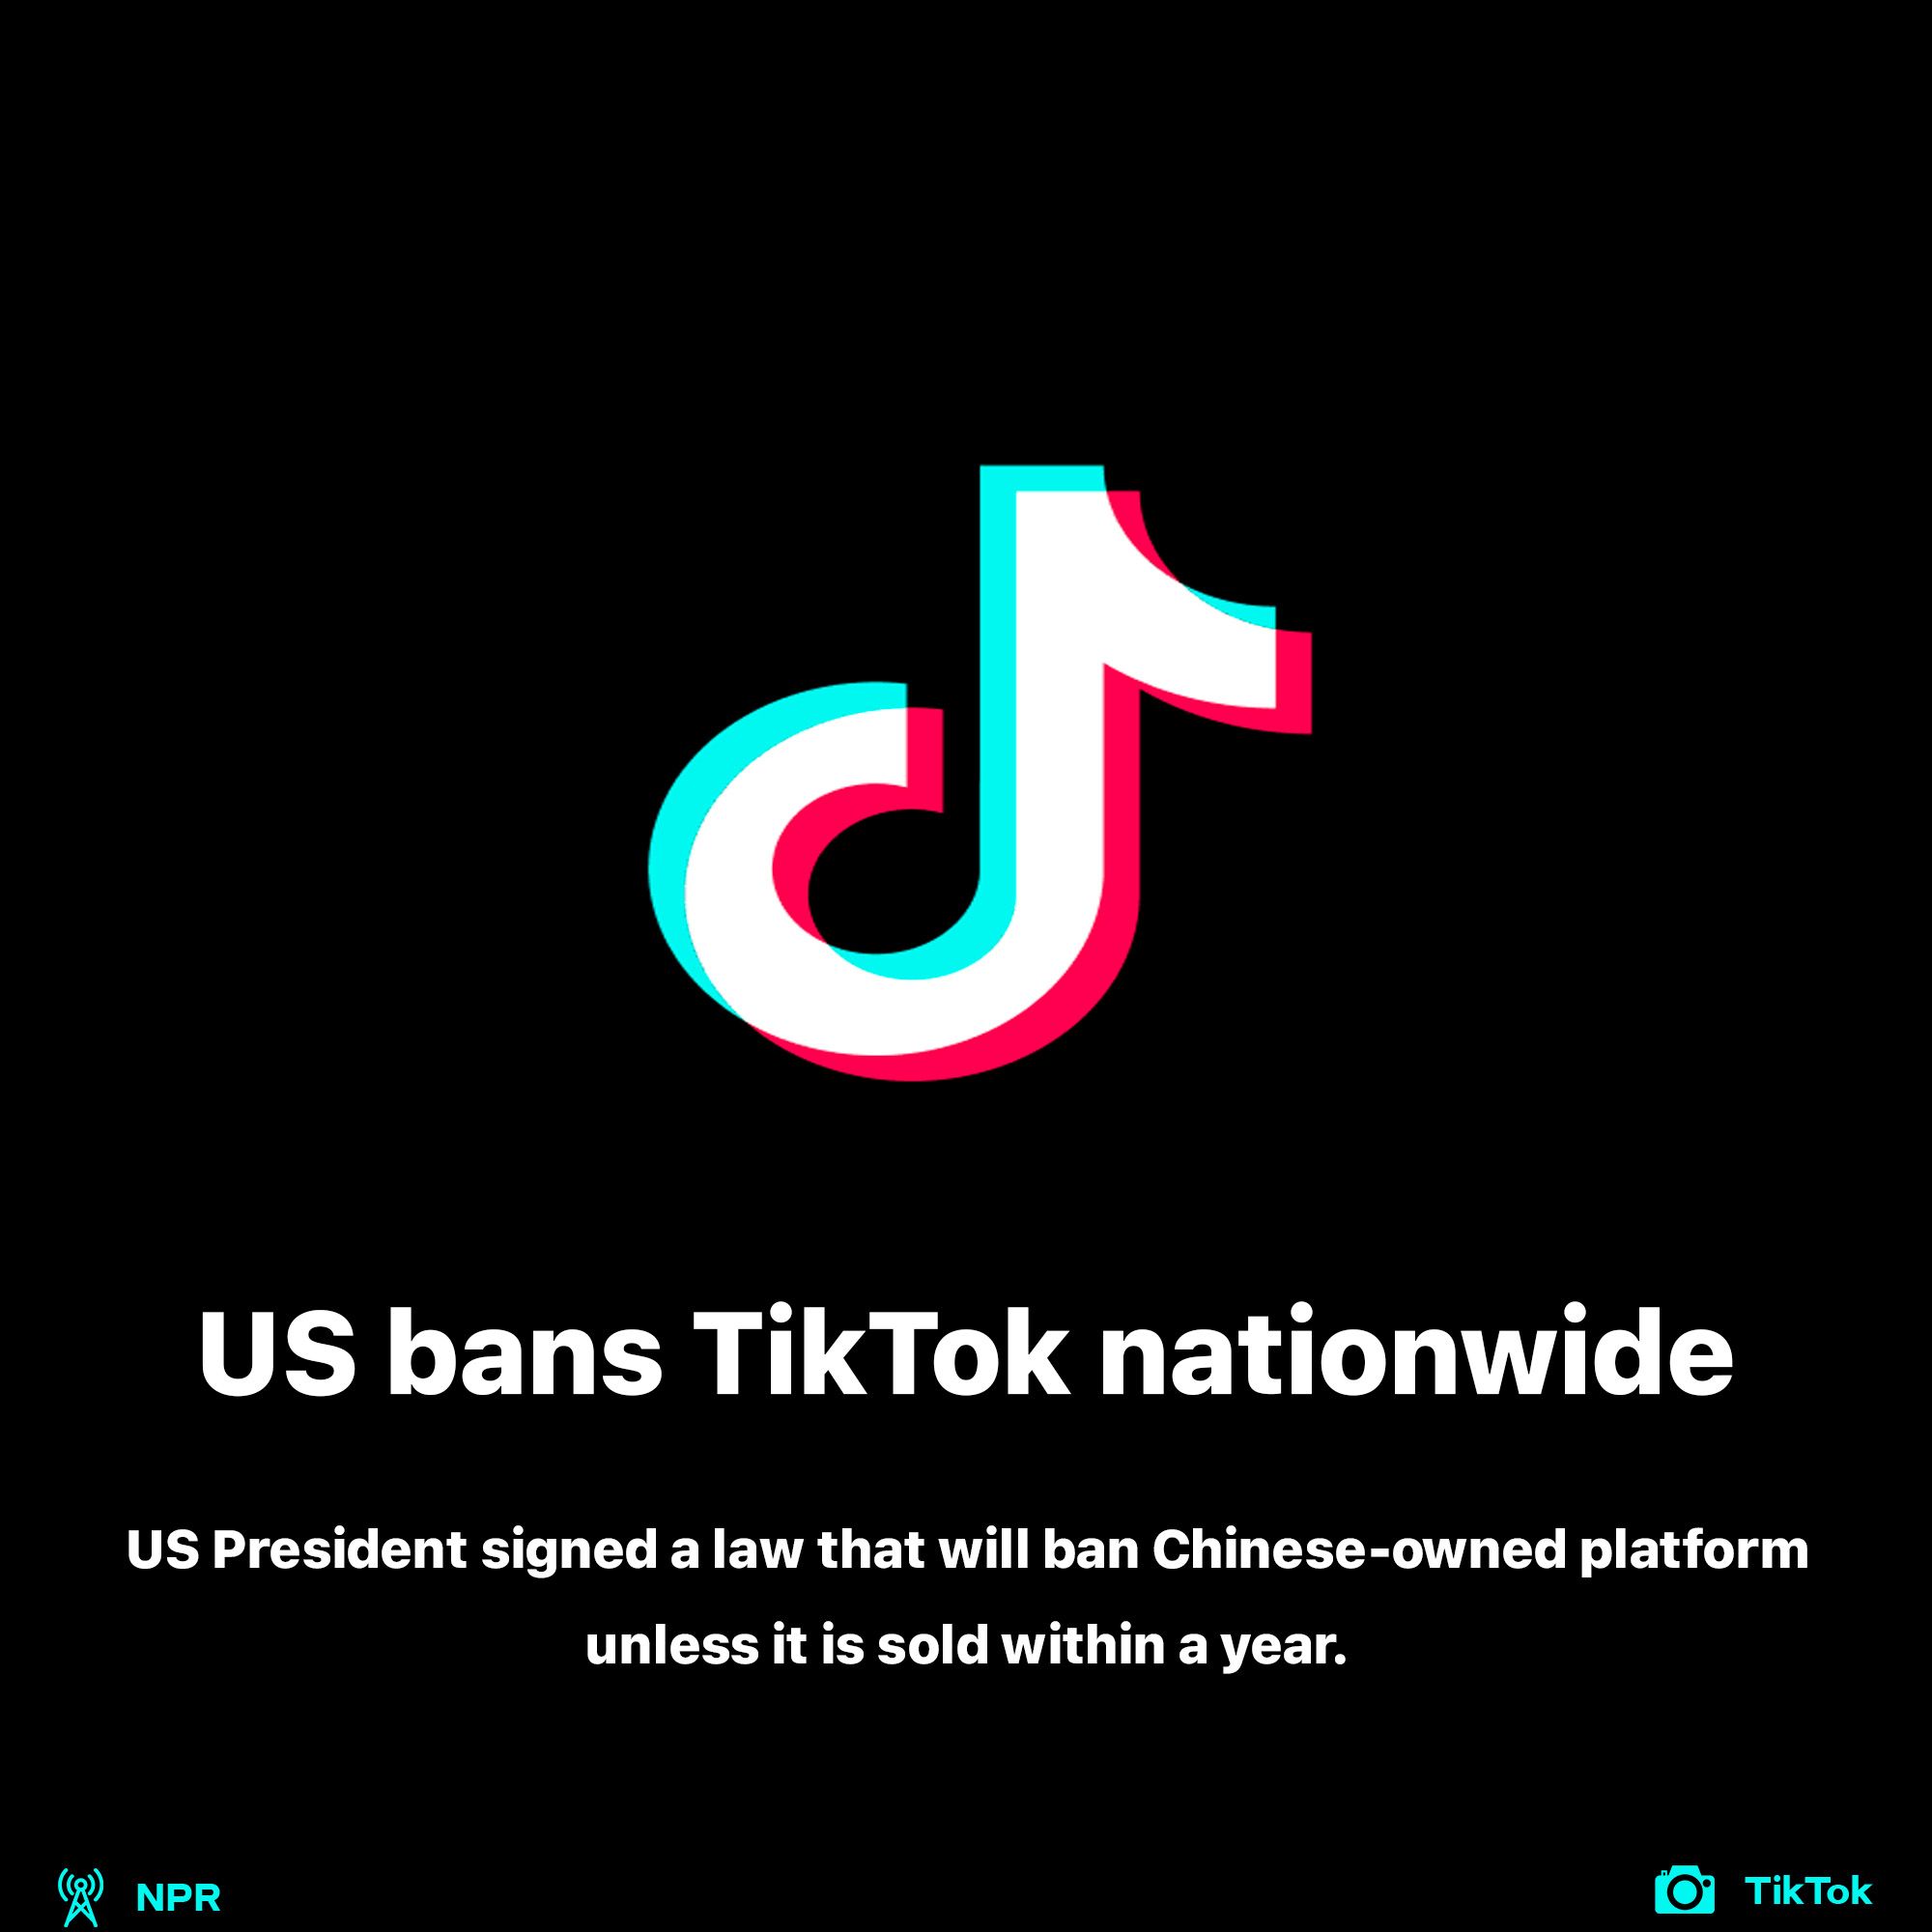 US bans TiTok